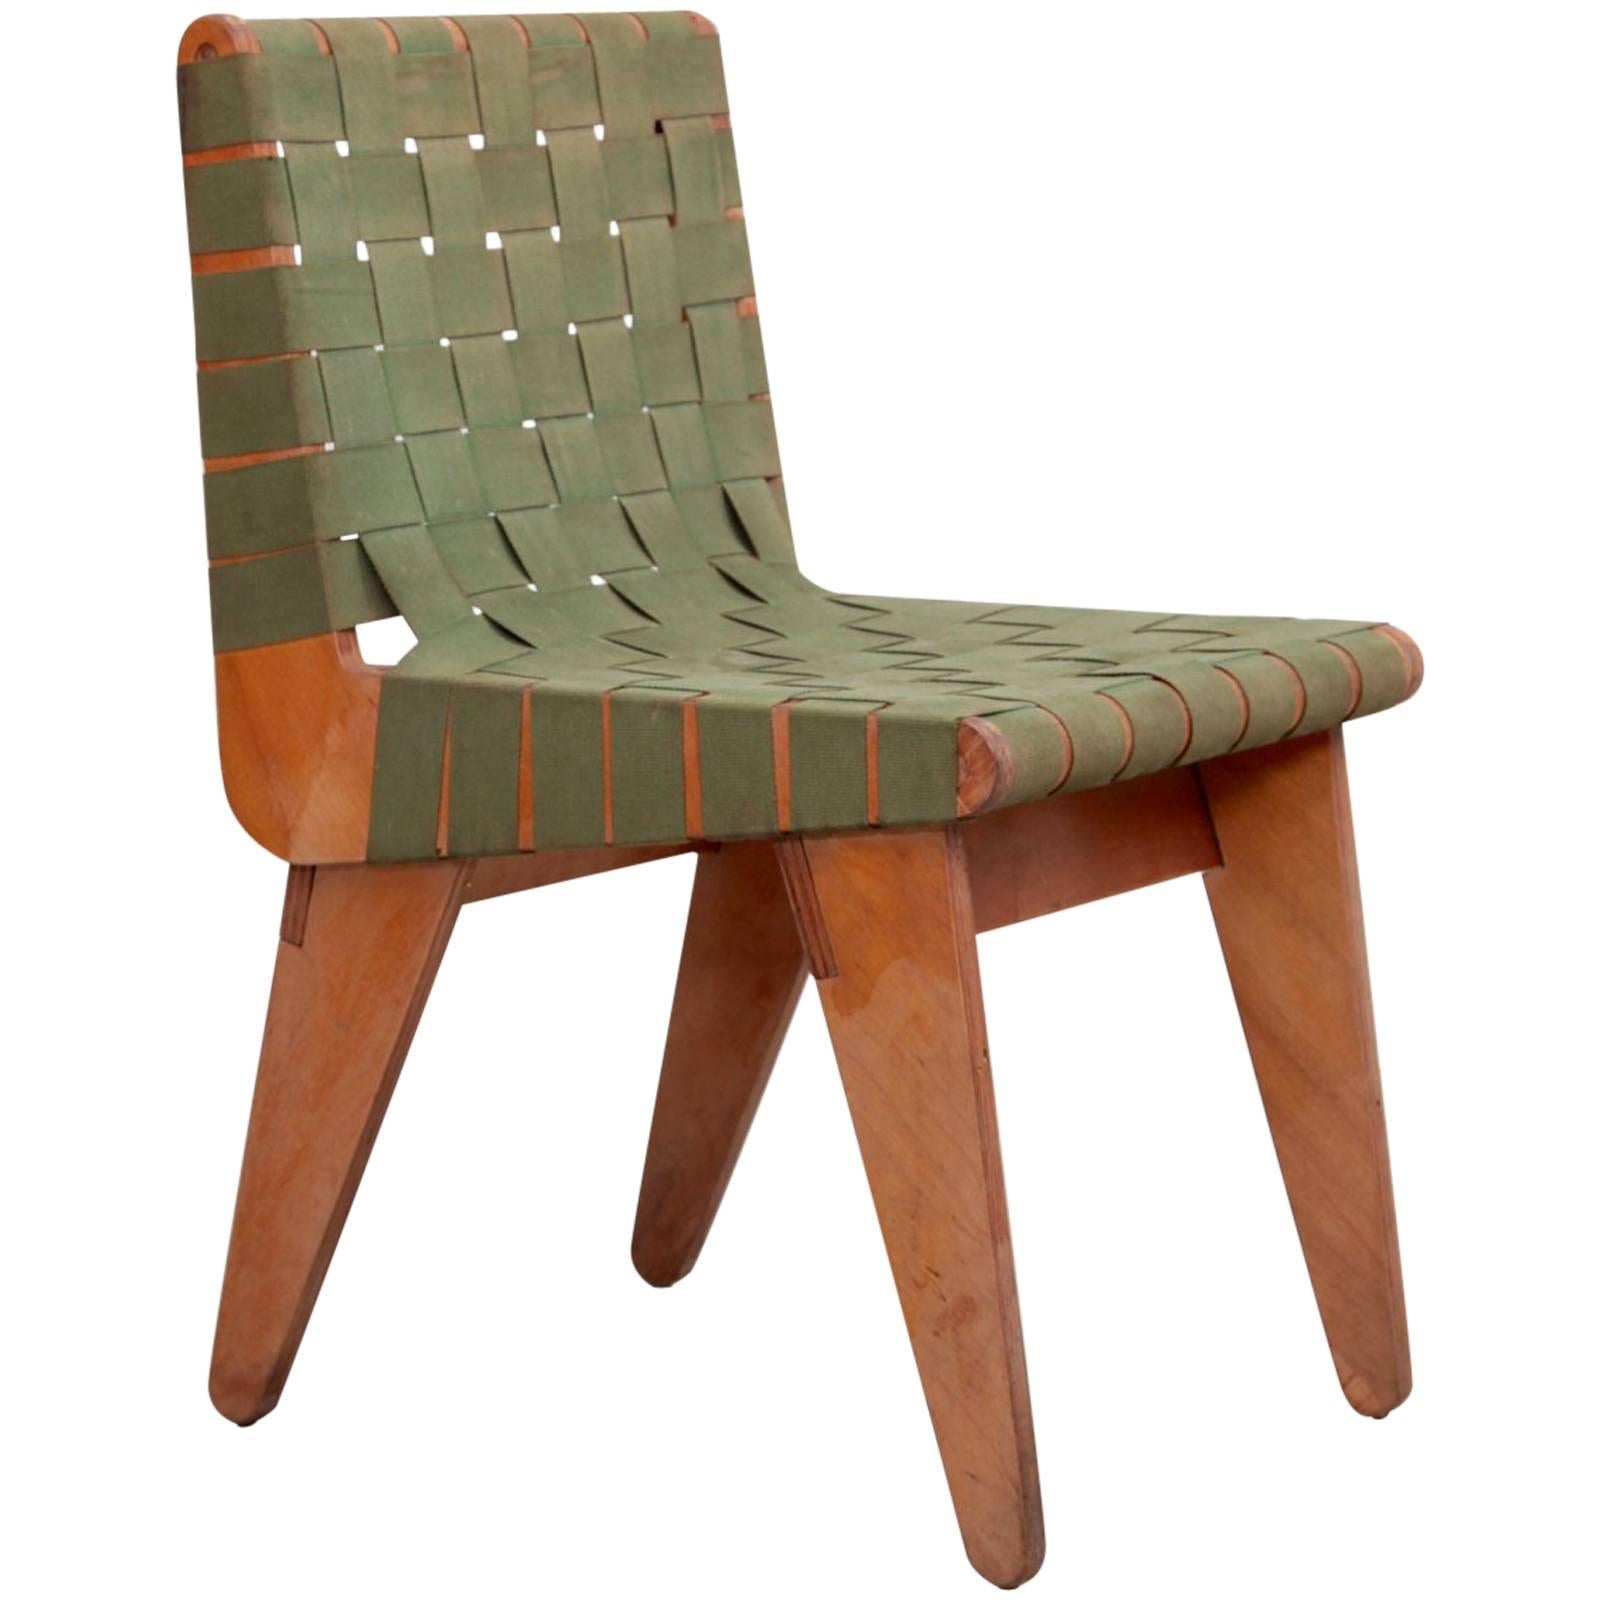 Original Green 1949 Klaus Grabe Plywood Chair